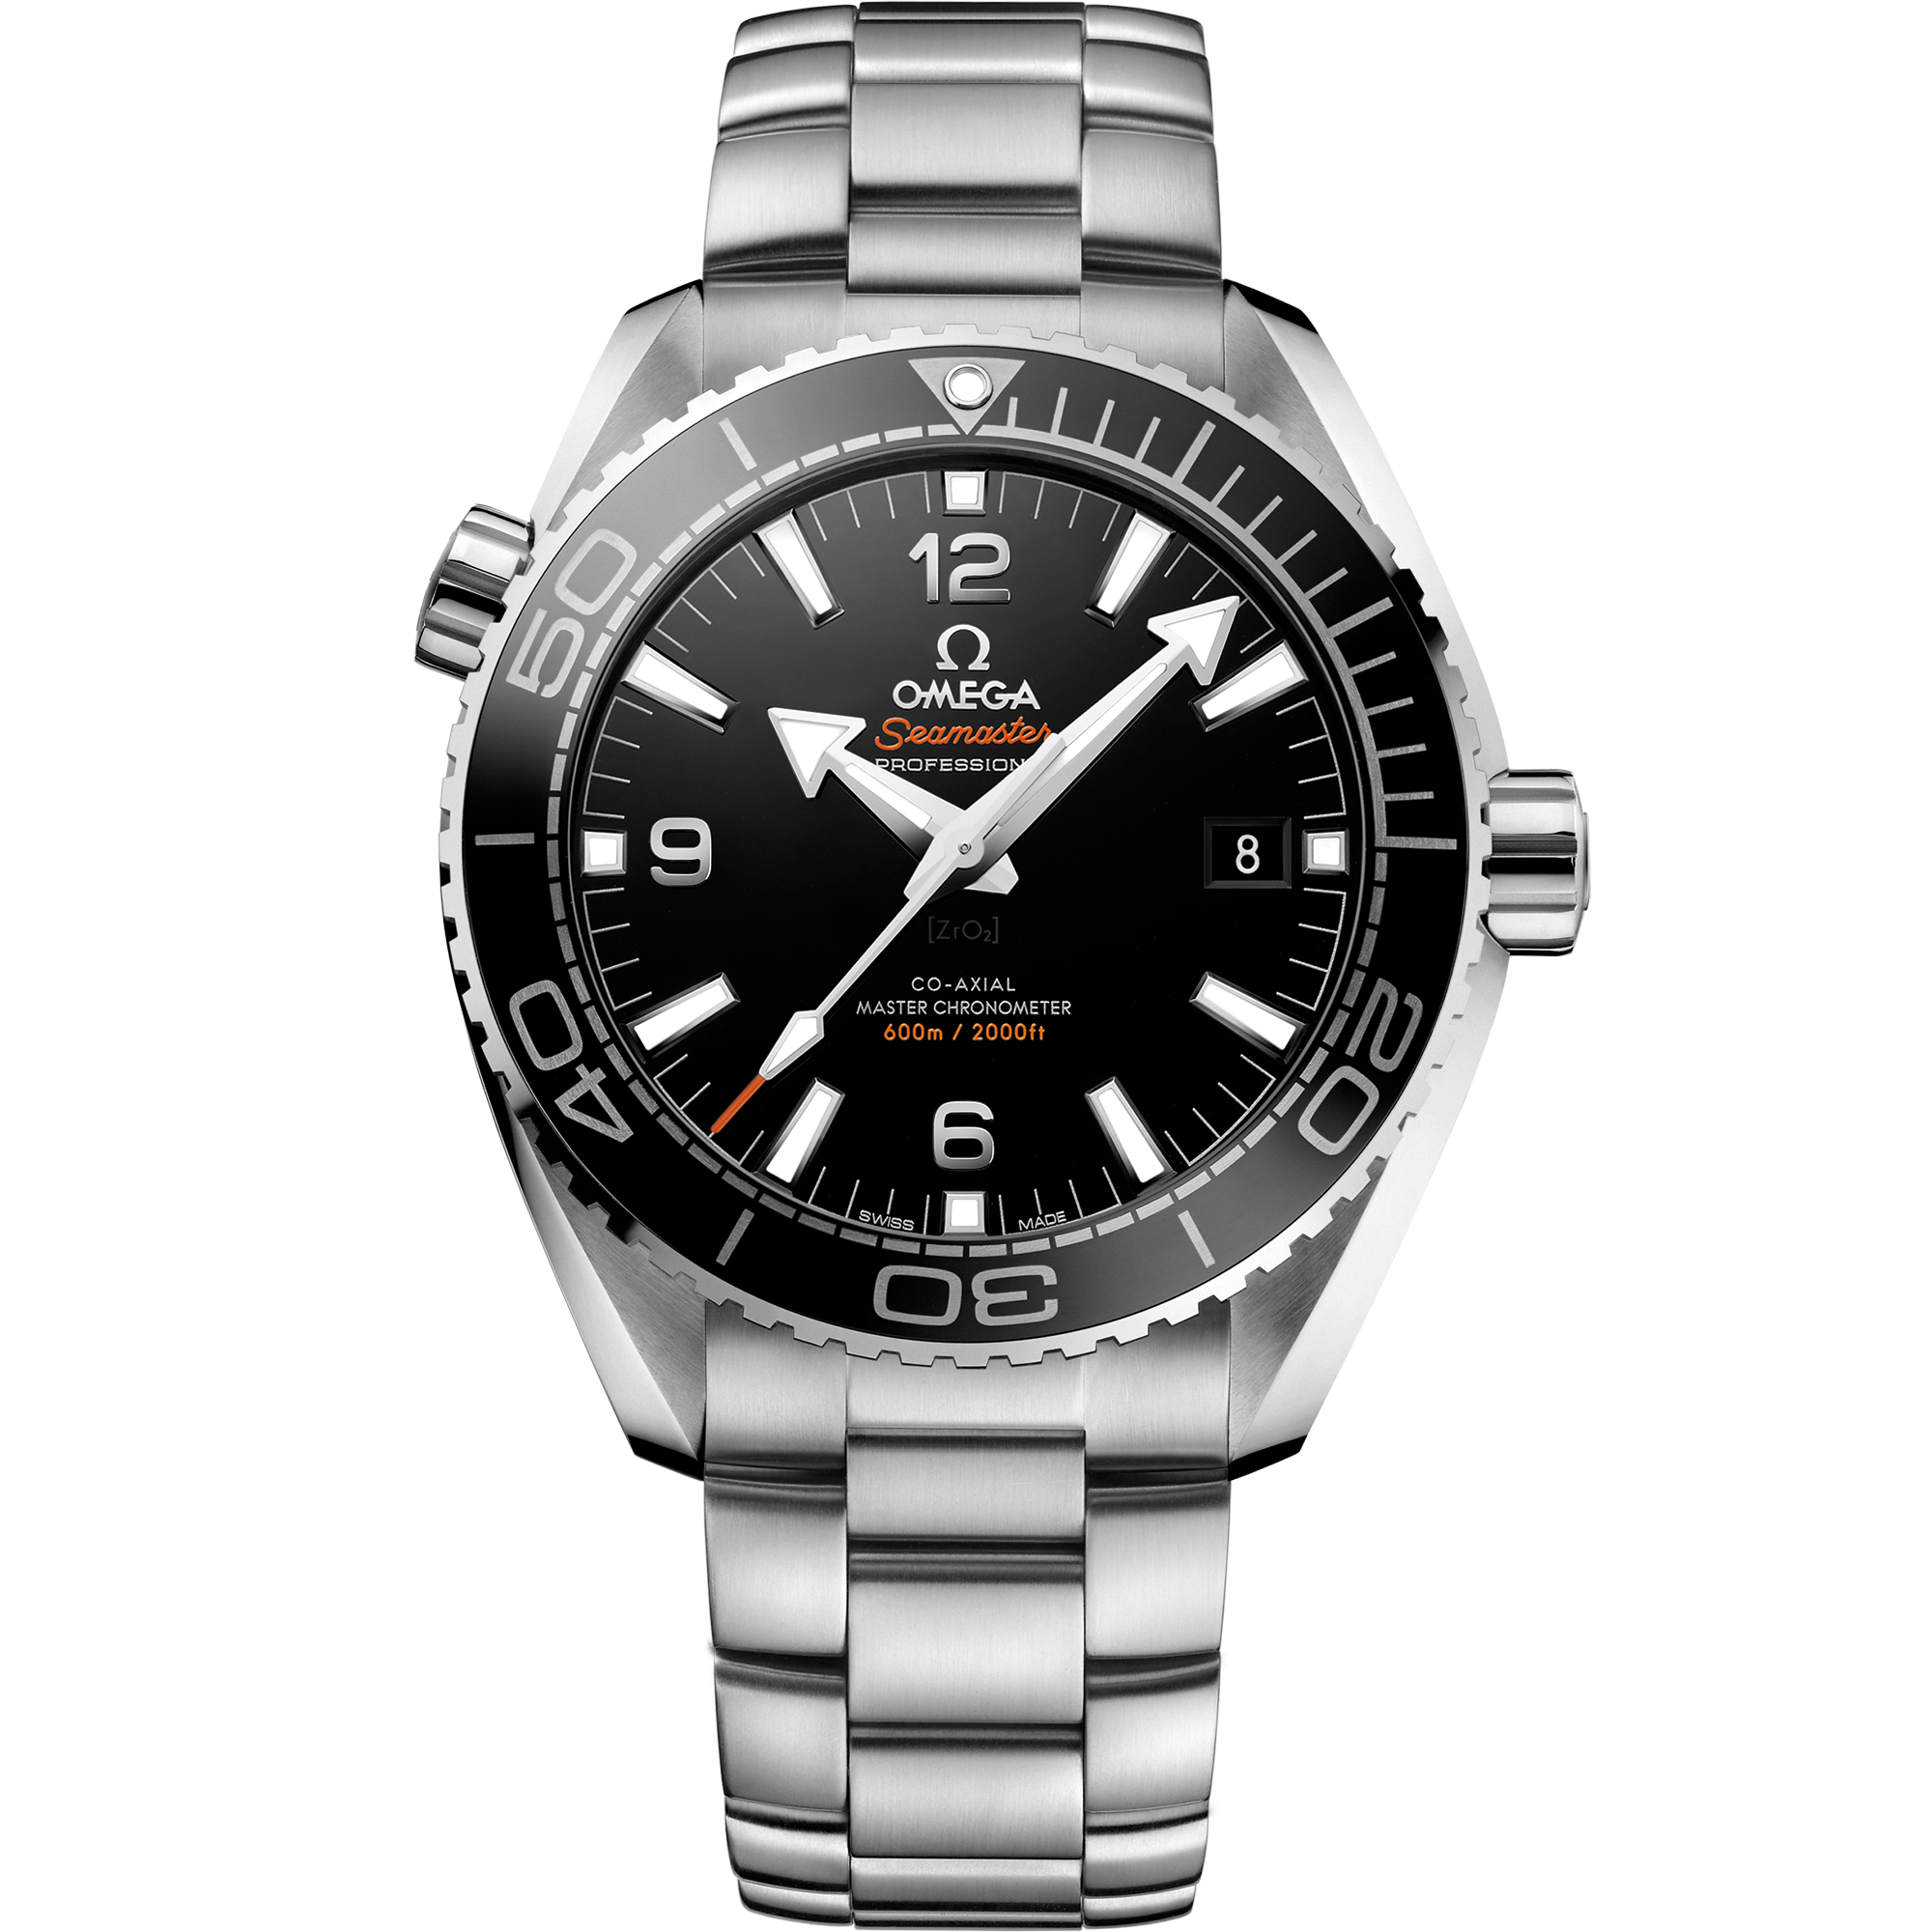 Planet Ocean 600M Seamaster Steel Chronometer Watch 215.30.44.21.03.001 |  OMEGA US®